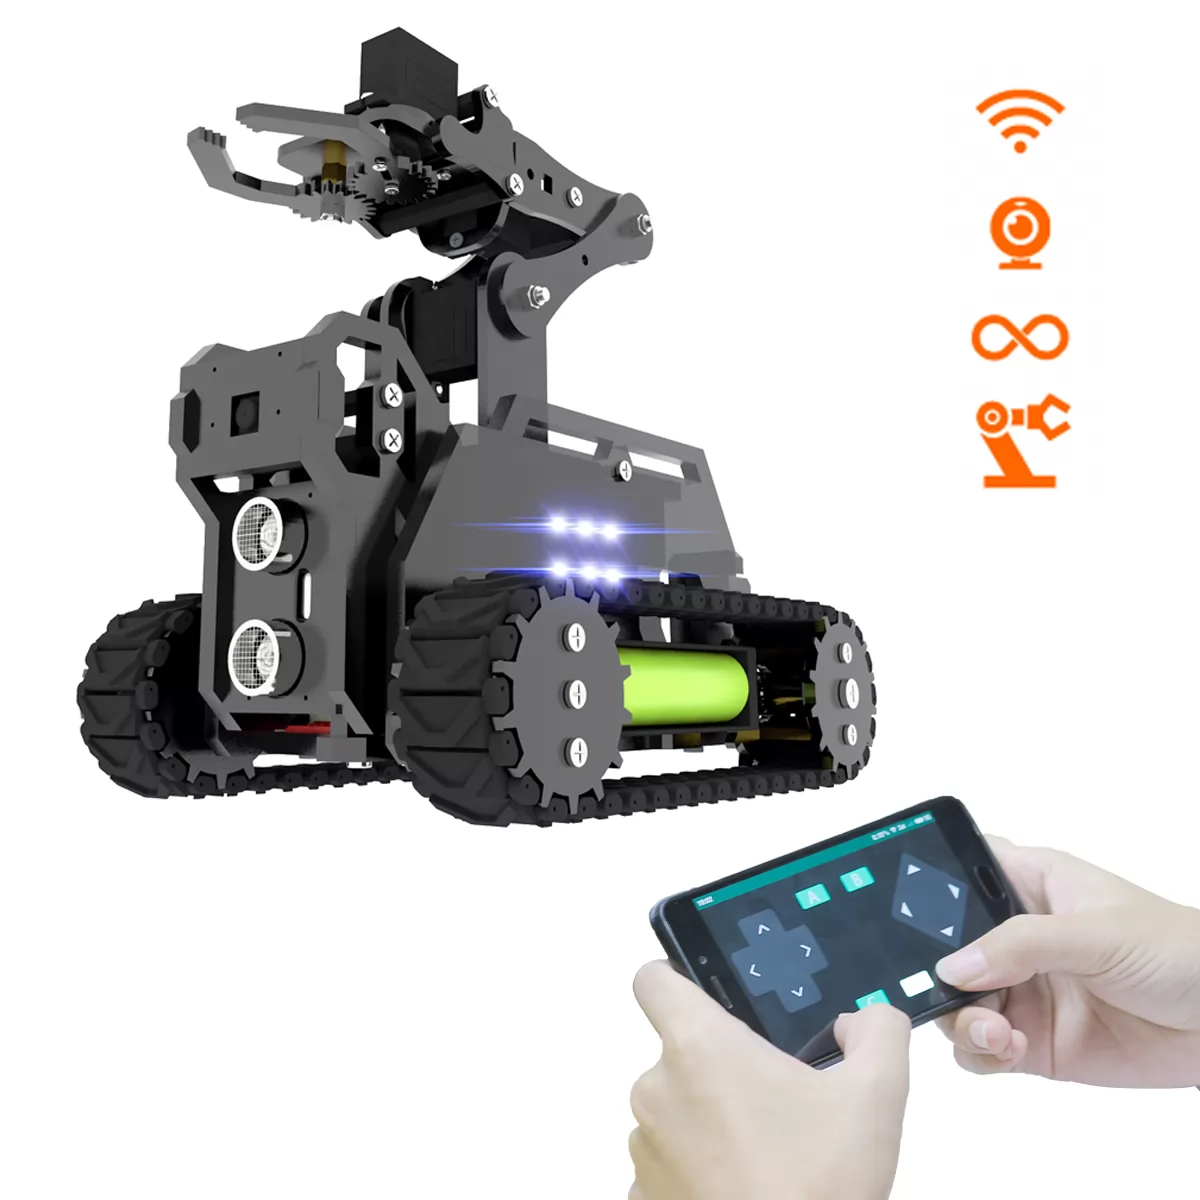 Adeept RaspTank WiFi Wireless Smart Robot Car Kit for Raspberry Pi 4/3B, with 4-DOF Robotic Arm, OpenCV Target Tracking